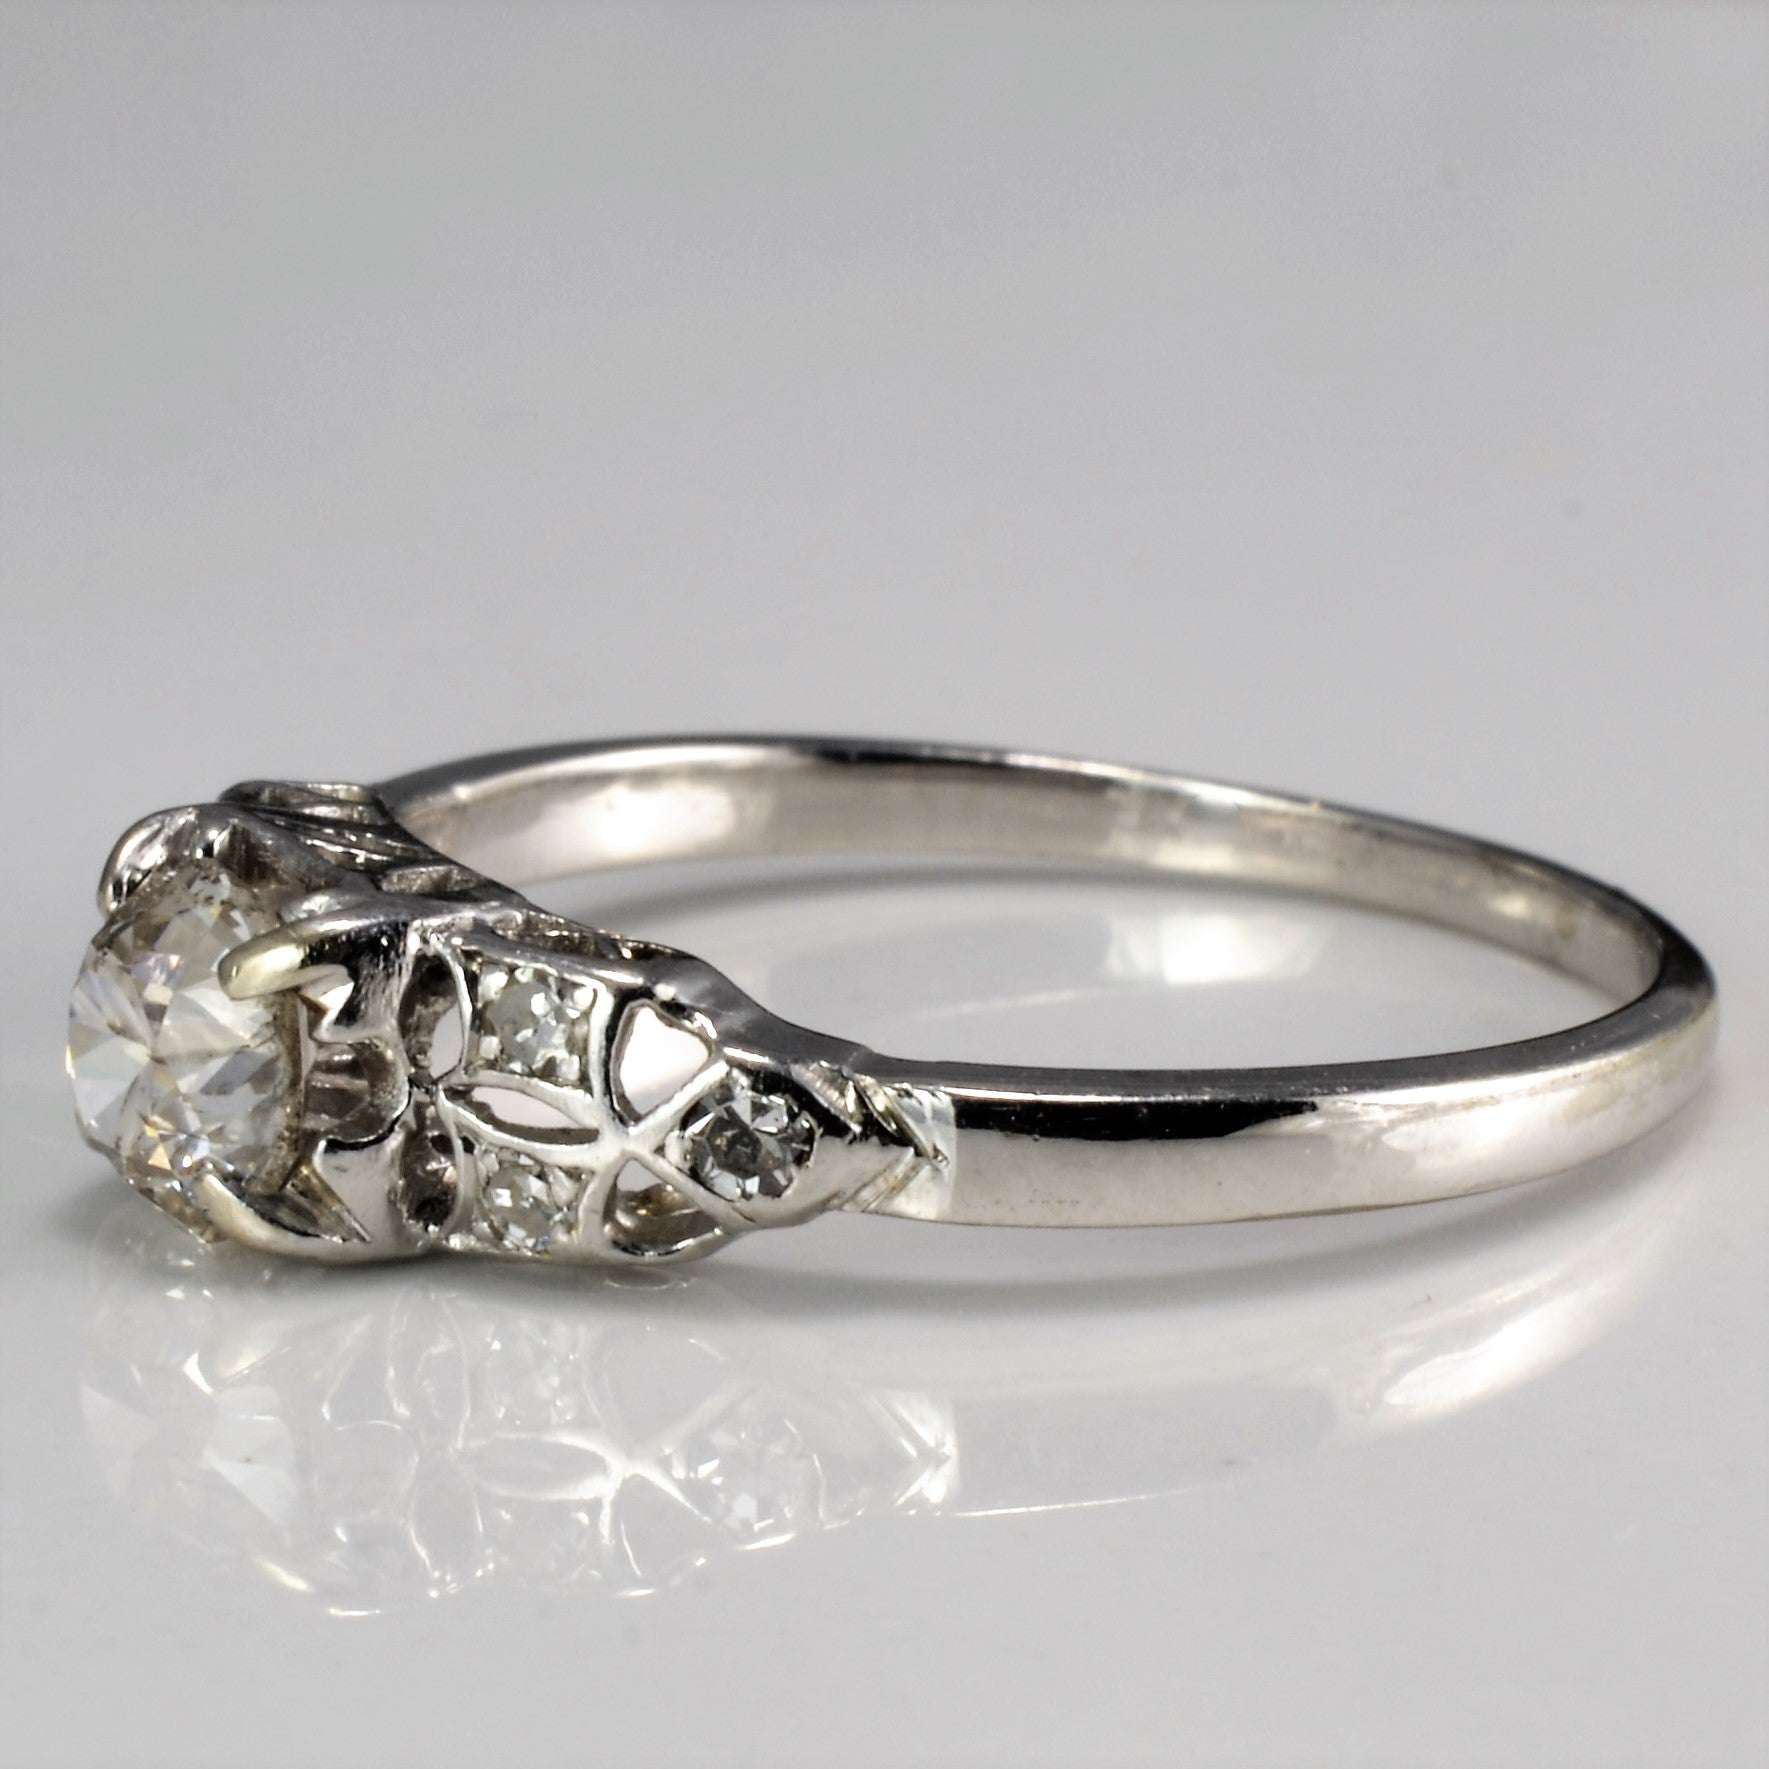 Vintage Art Deco Diamond Engagement Ring | 0.51 ctw, SZ 7 |